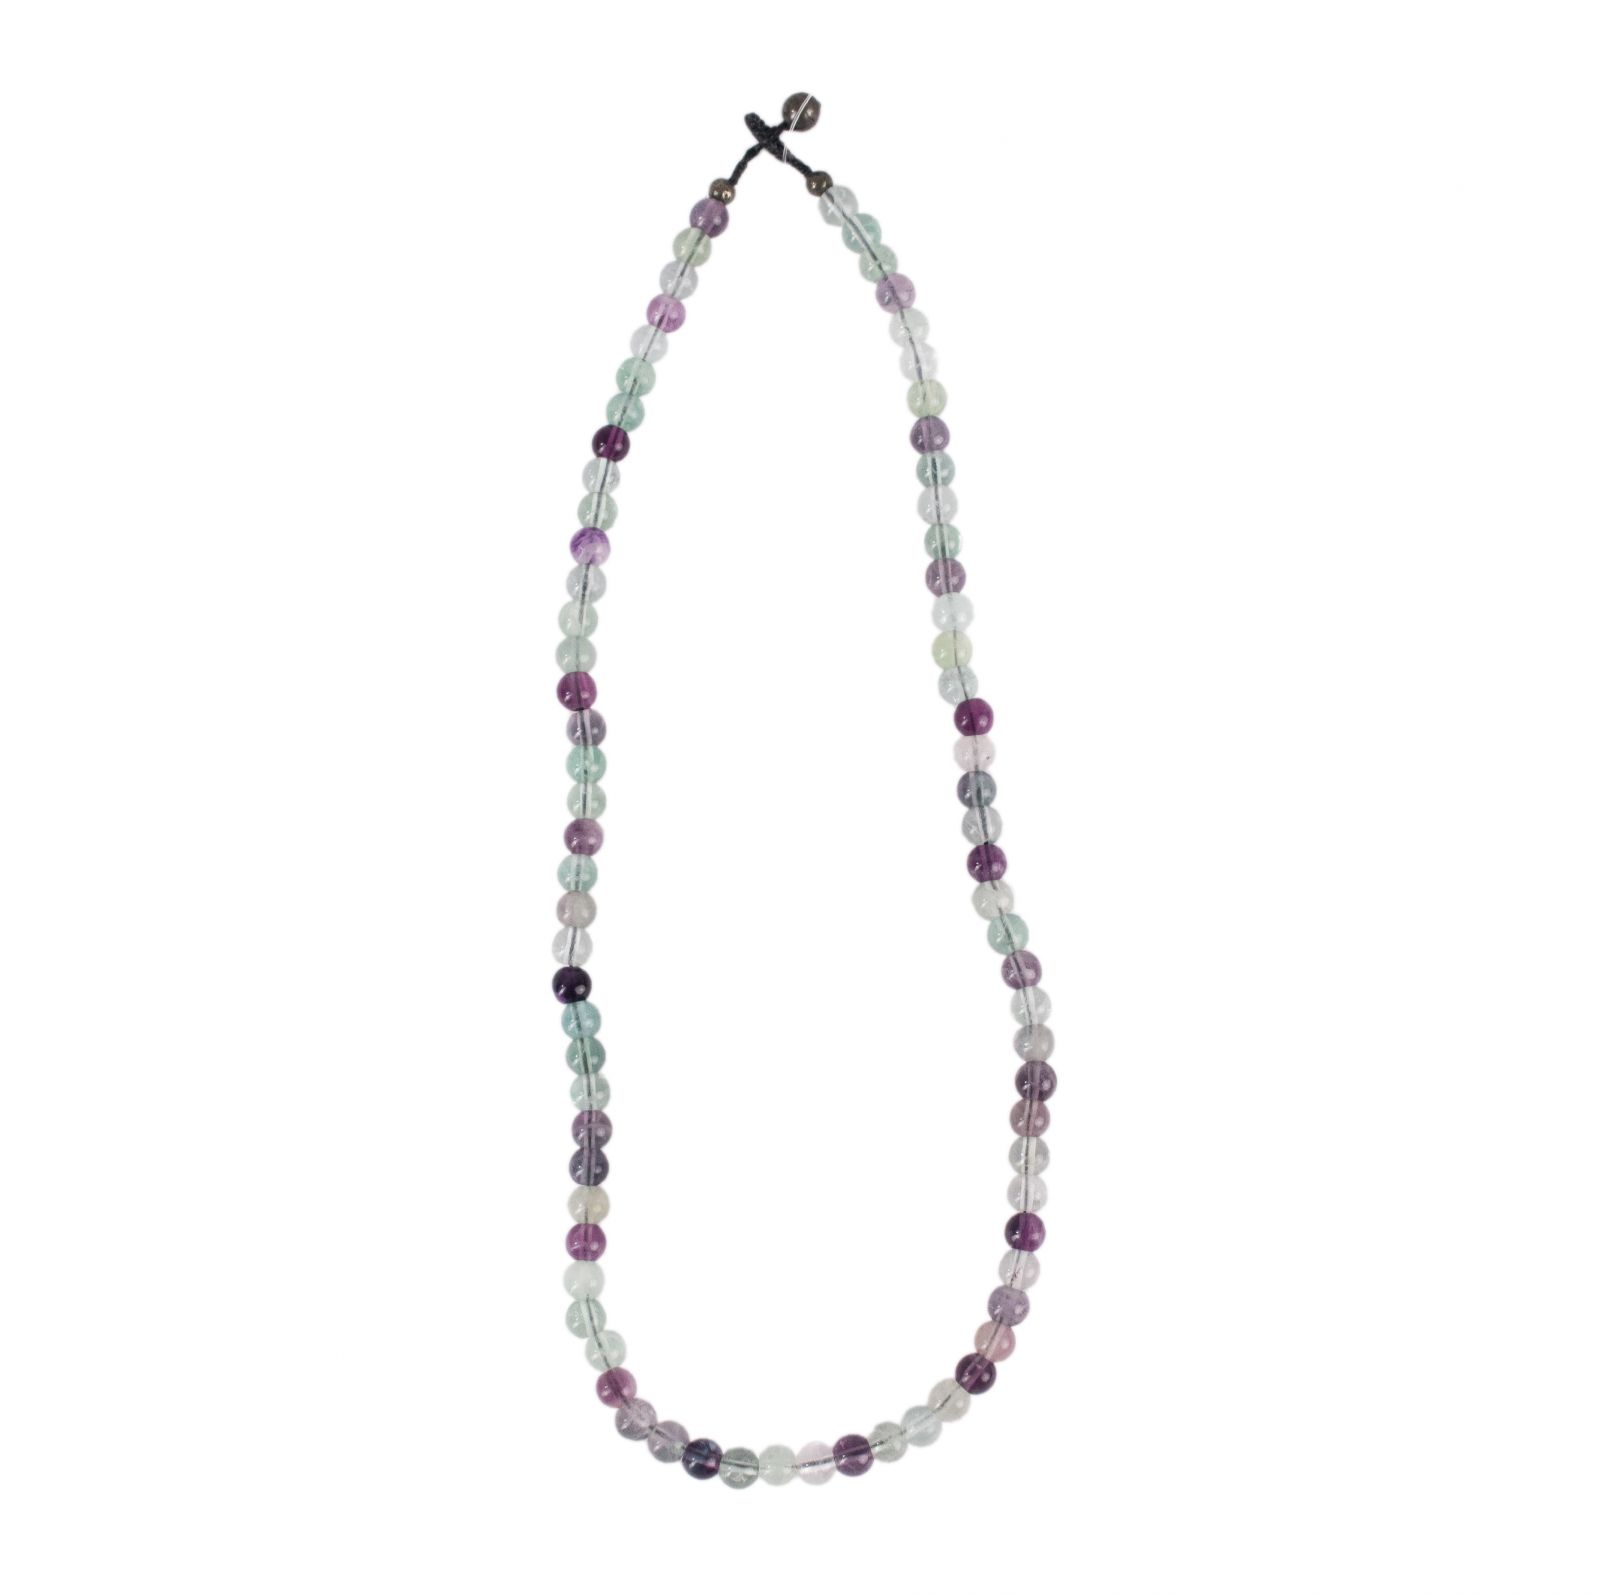 Fluorite bead necklace Thailand